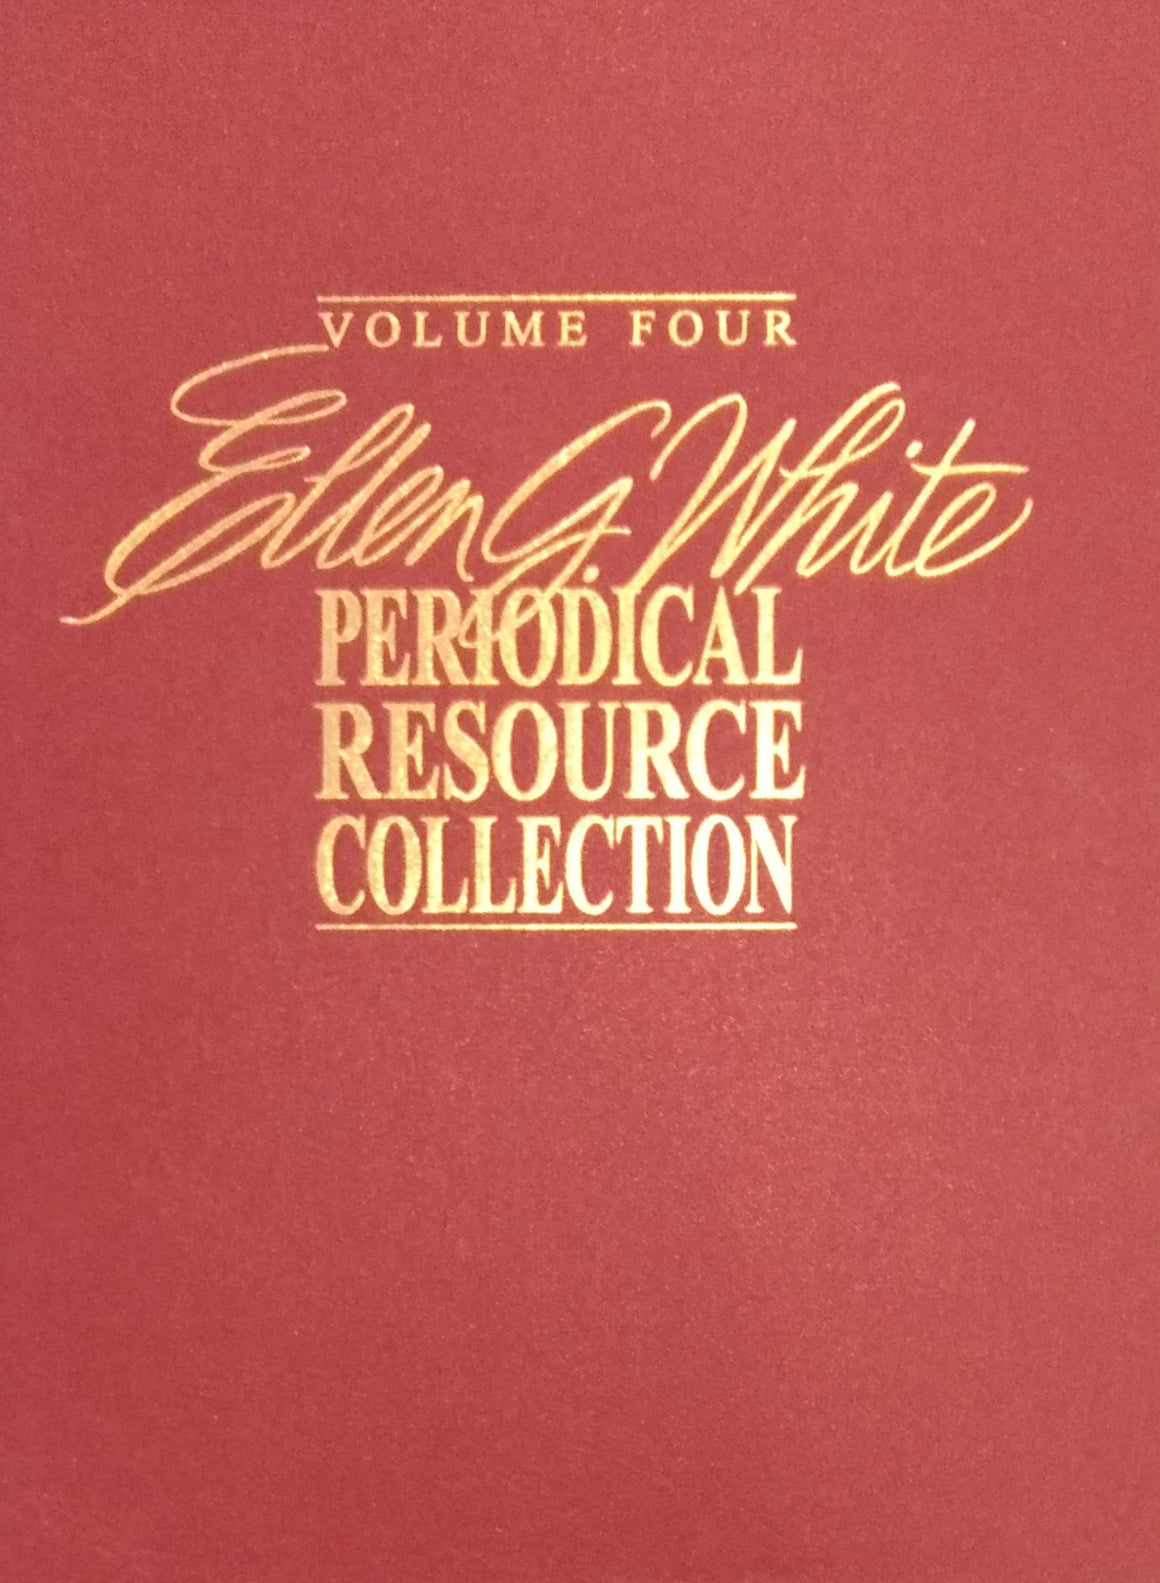 Ellen G. White Periodical Resource Collection, Vol. 4